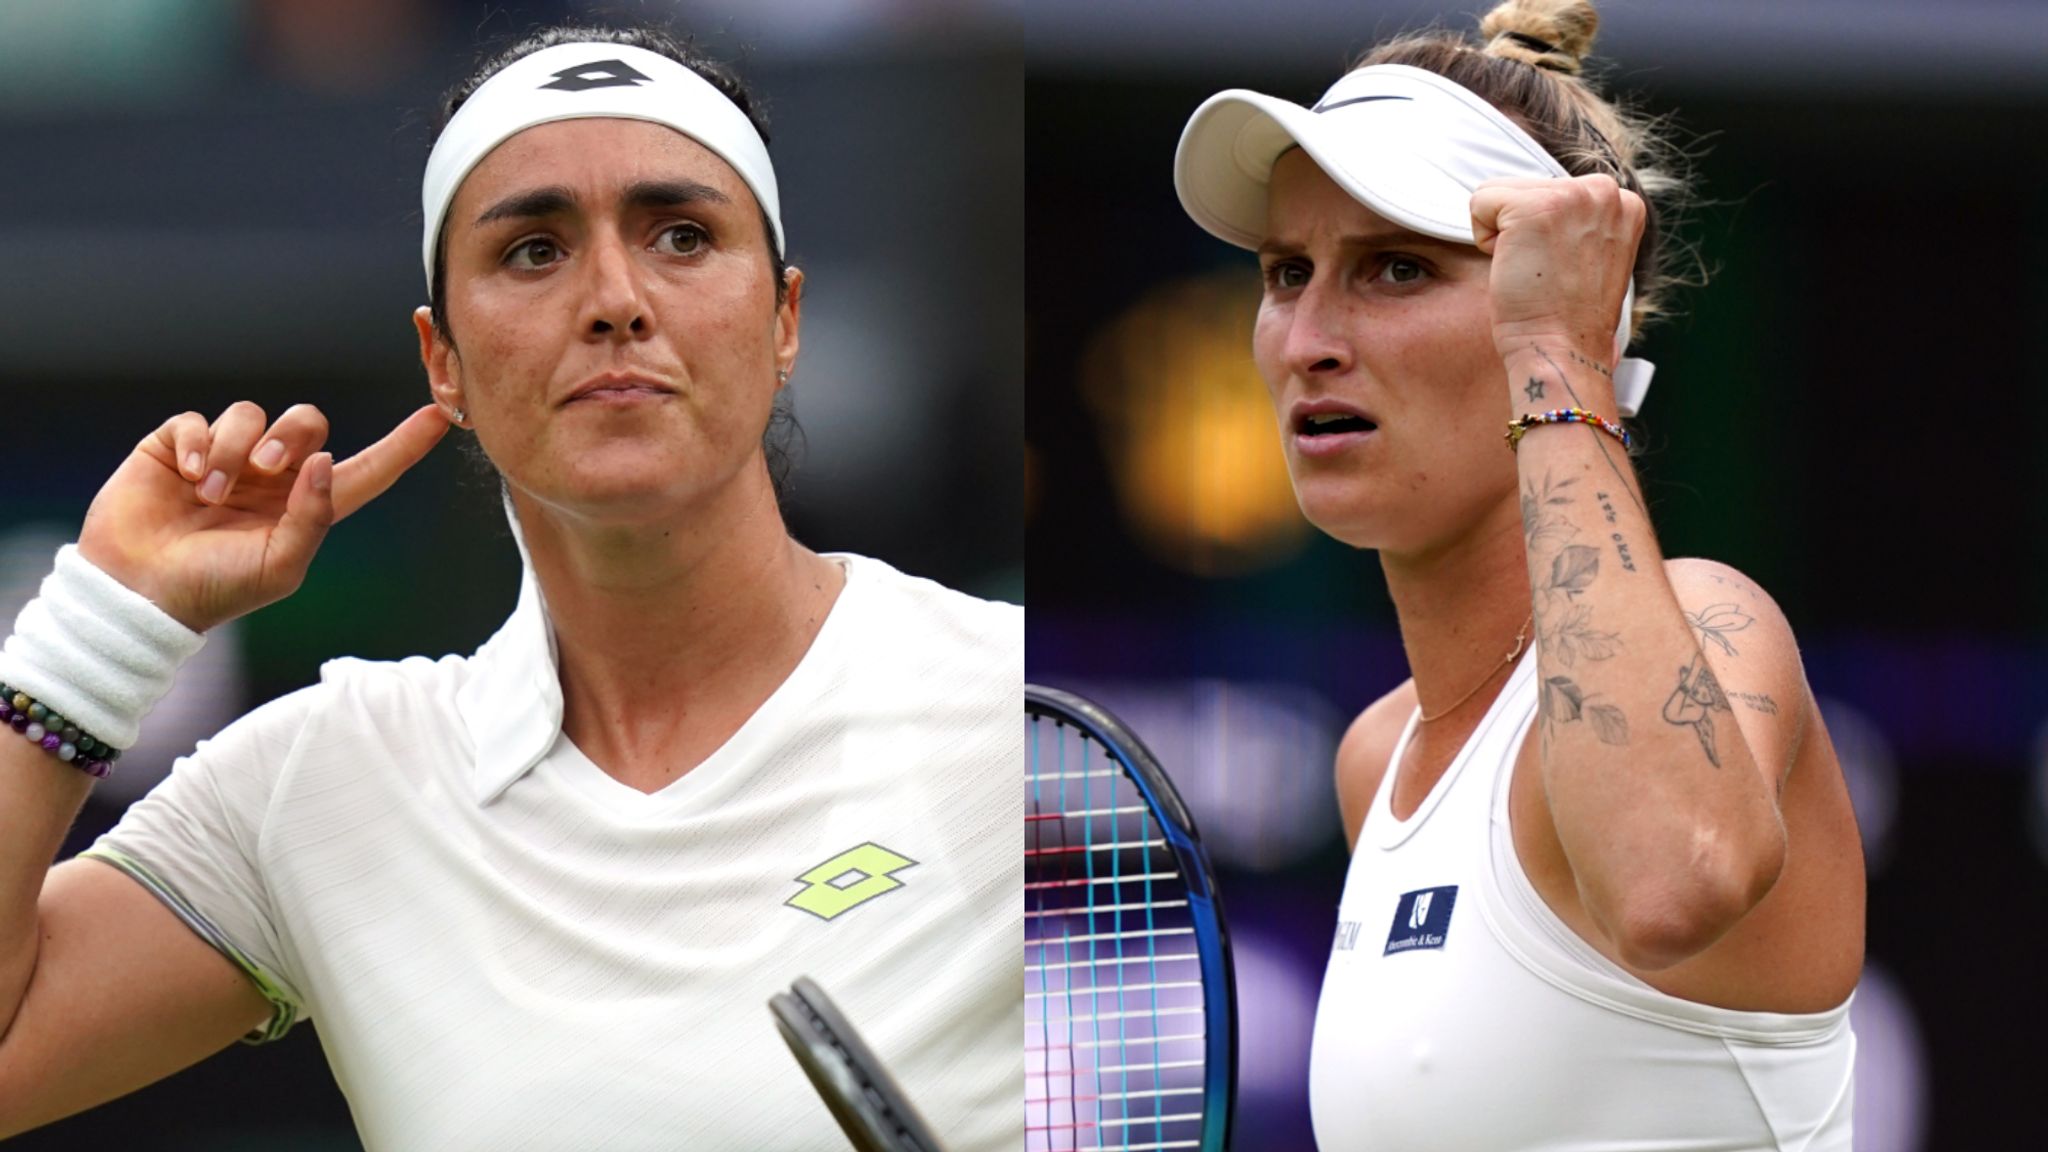 Wimbledon Ons Jabeur overcomes Aryna Sabalenka to set up final date with Marketa Vondrousova Tennis News Sky Sports